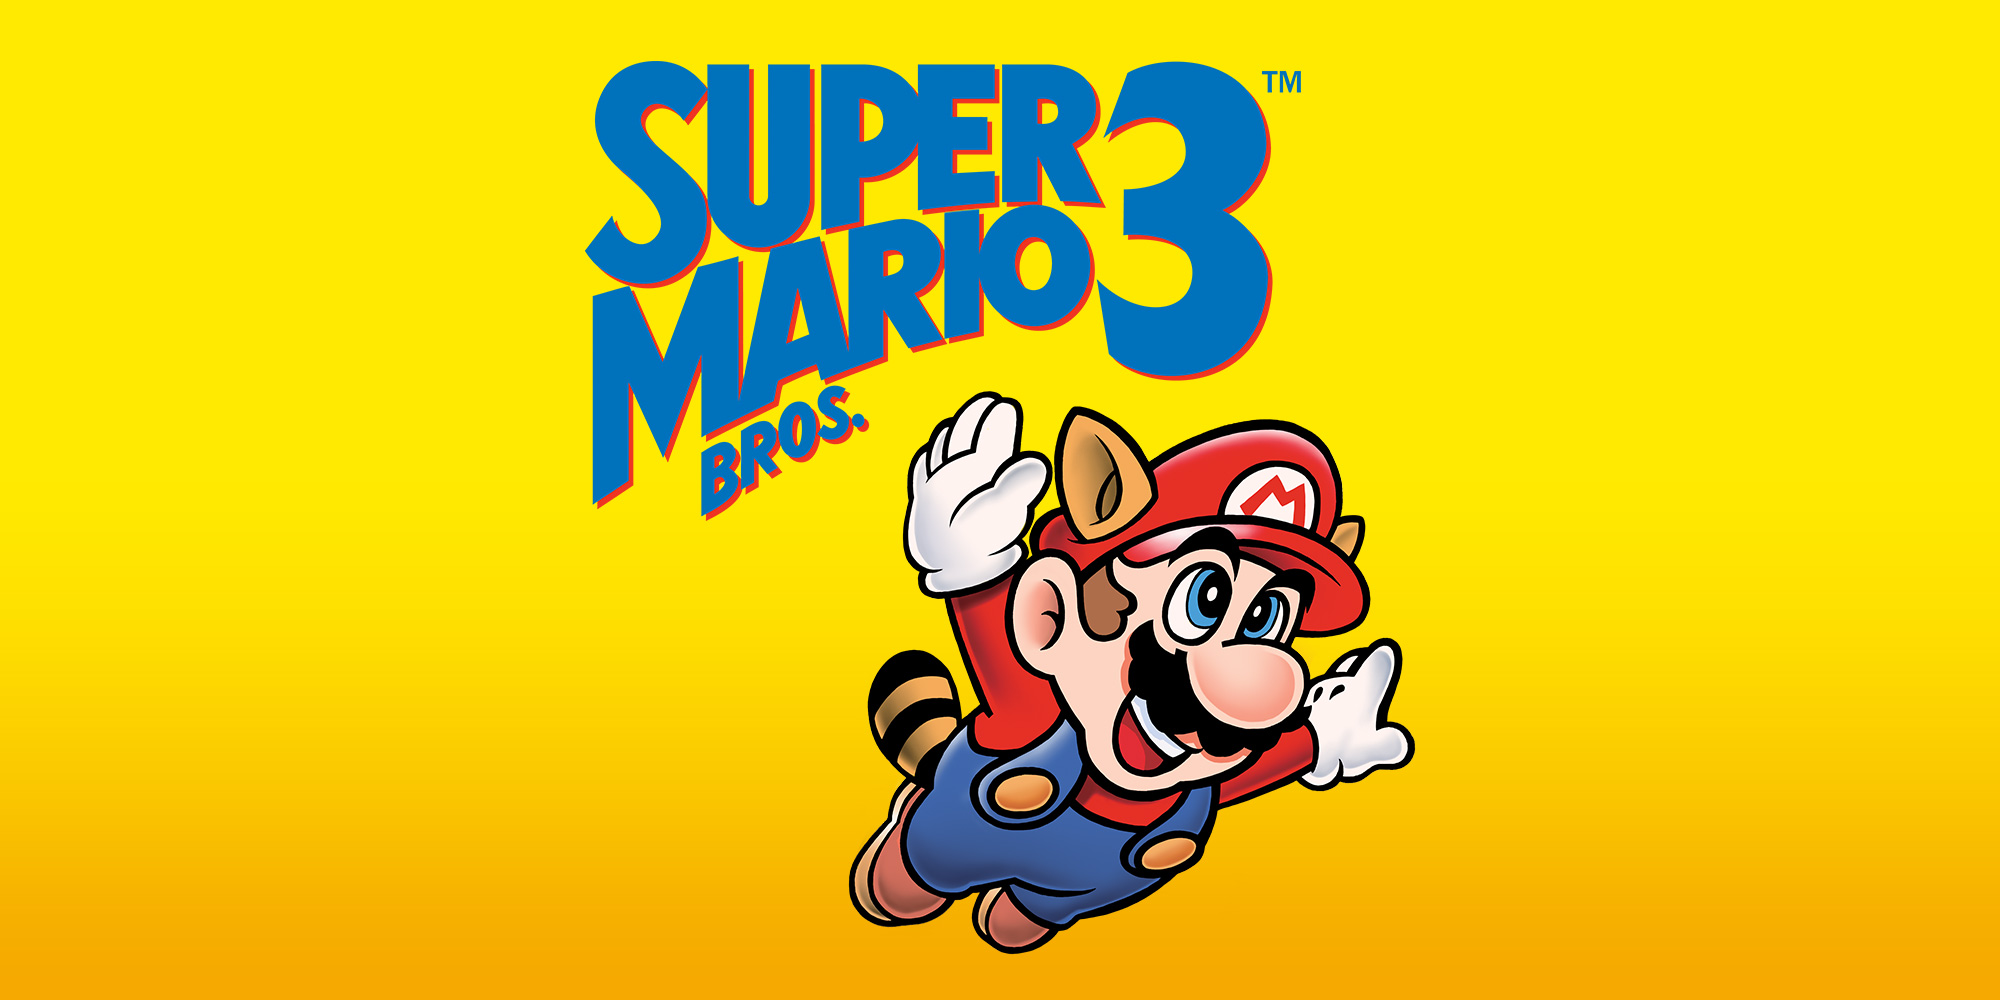 Super Mario Bros 3 - Finally completed!